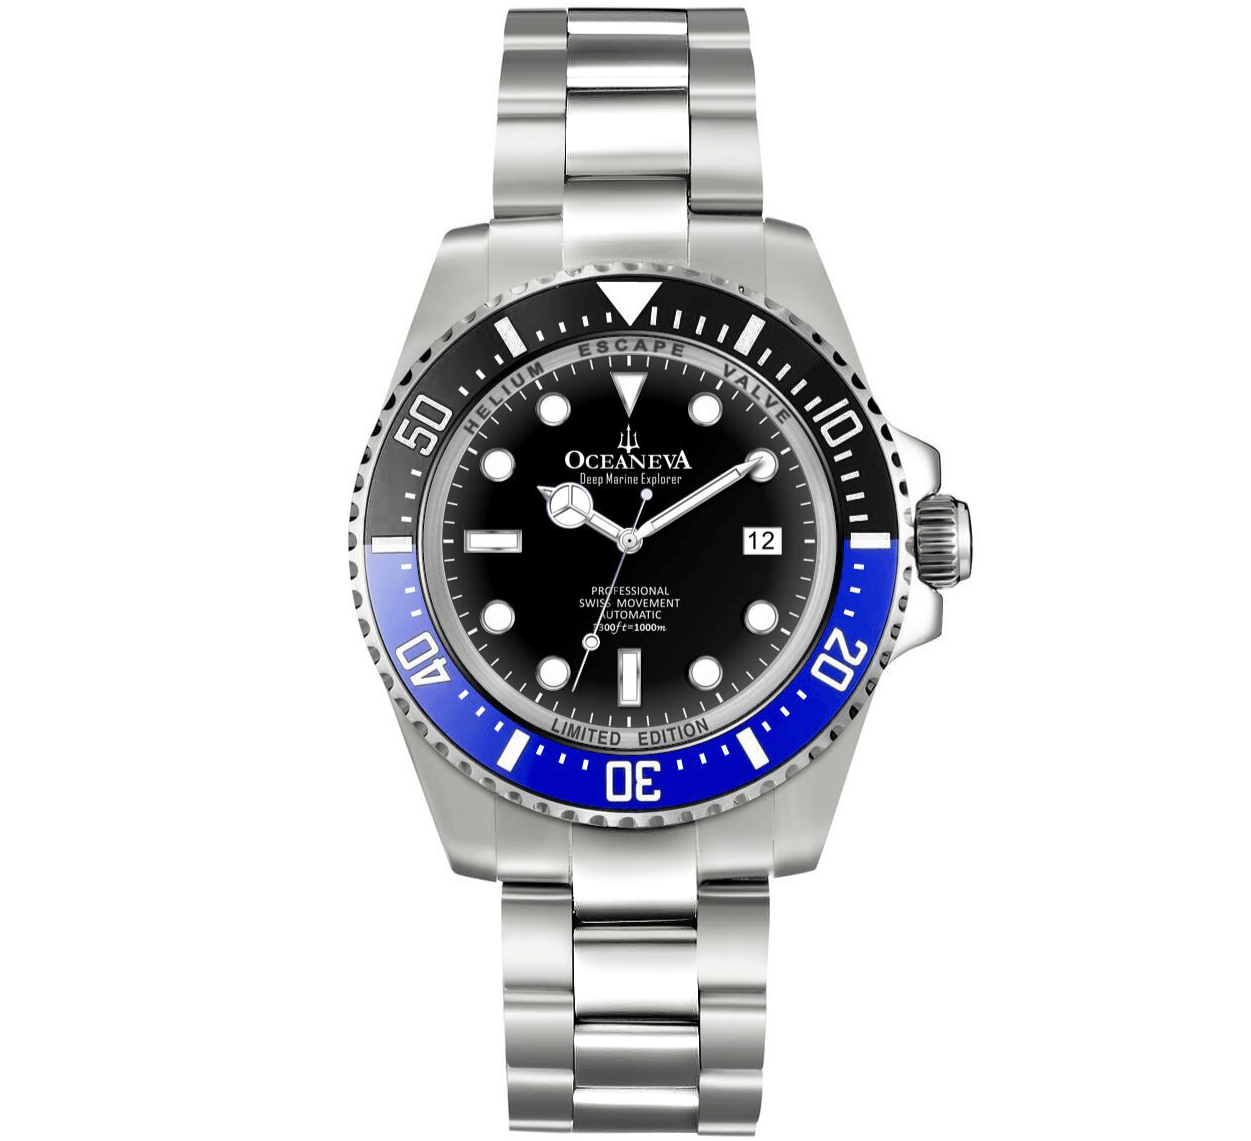 Oceaneva Men's Deep Marine Explorer 1000M Pro Diver Watch Blue and Black - BL200BKST 1000M, 1000m Dive watch, 316L Stainless Steel, BGW9 Swiss Super-Luminova, Ceramic Beze, Dive Watch, Sw200-1 Swiss Automatic Movement